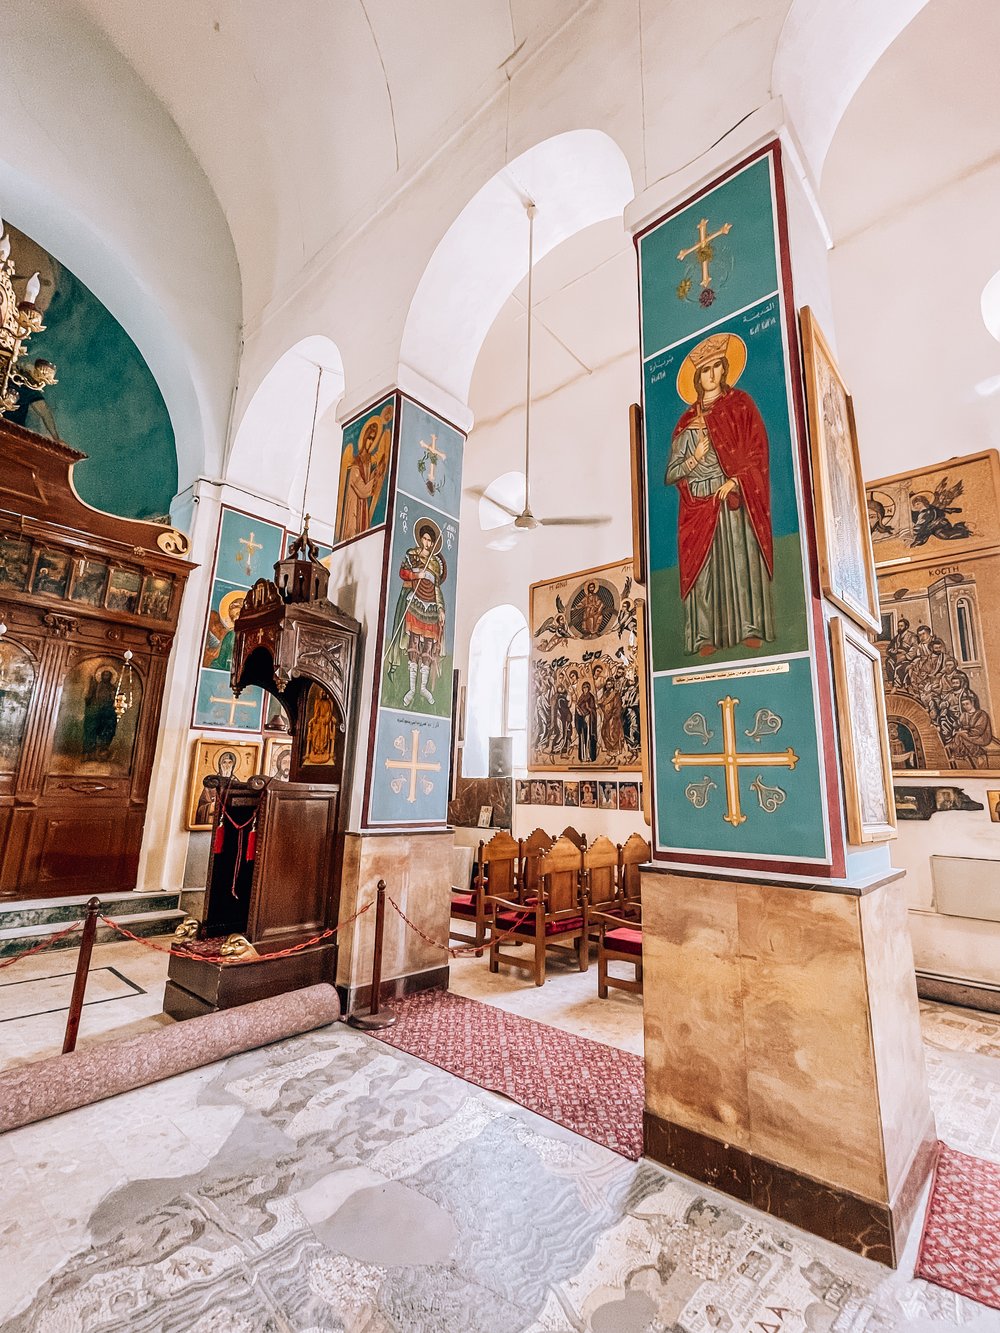 Travel Guide to Jordan - Greek Orthodox Basilica of St. George